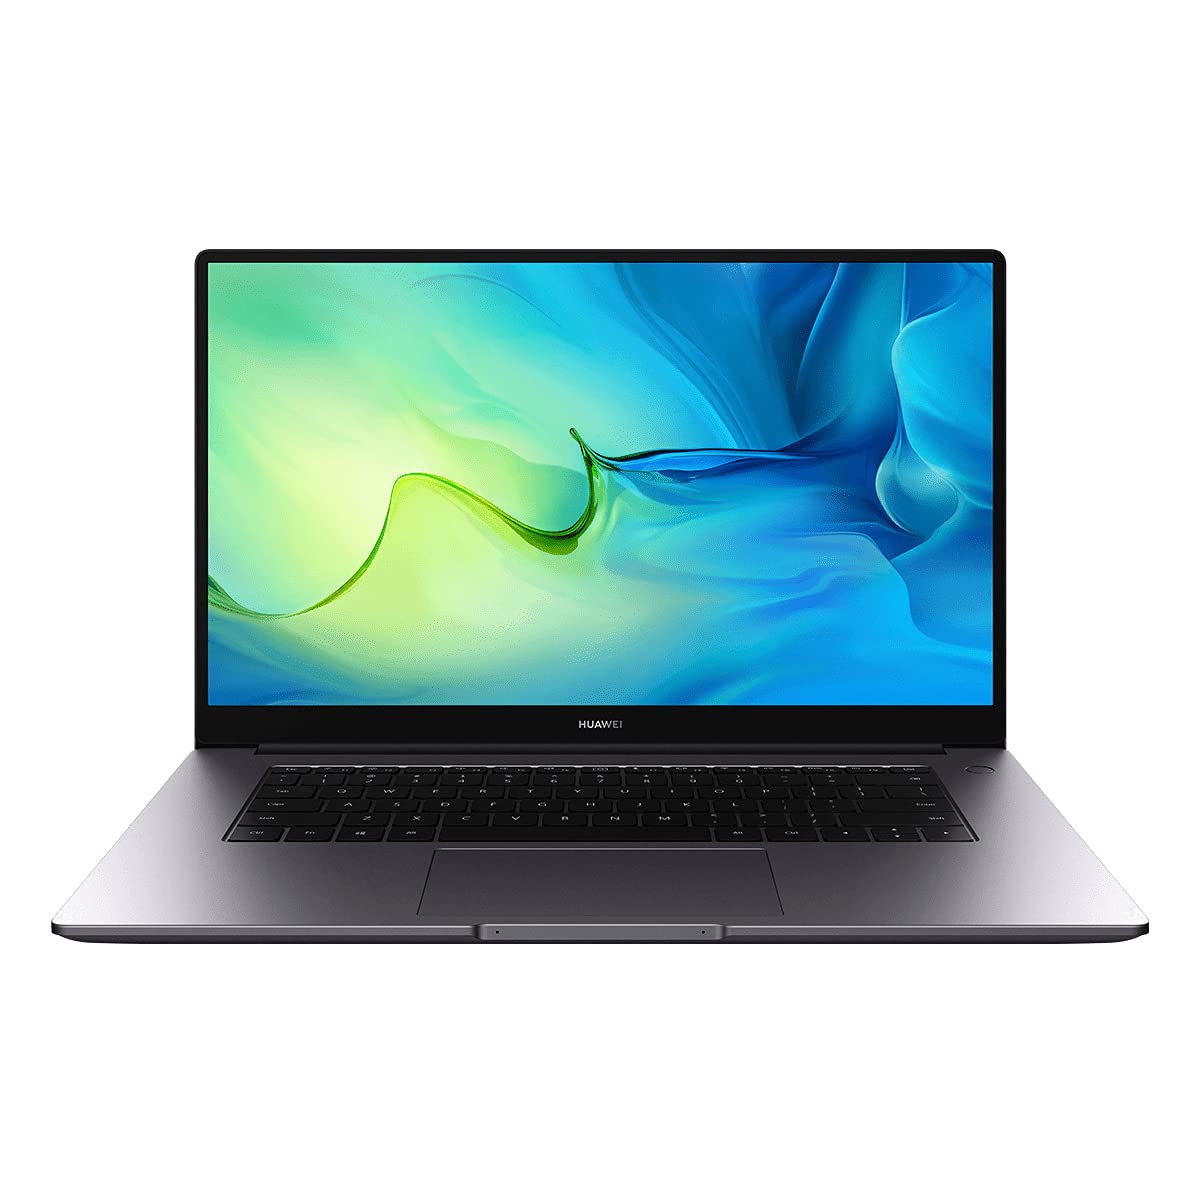 HUAWEI MateBook D 15 Laptop, 15,6 Zoll Ultrabook, 1080P FullView IPS-Display, Intel Core i5-1135G7-Prozessor, Fingerabdruck-EIN-/Aus-Taste, Wi-Fi 6, 16GB, 512GB SSD, Windows 10 Home 2021